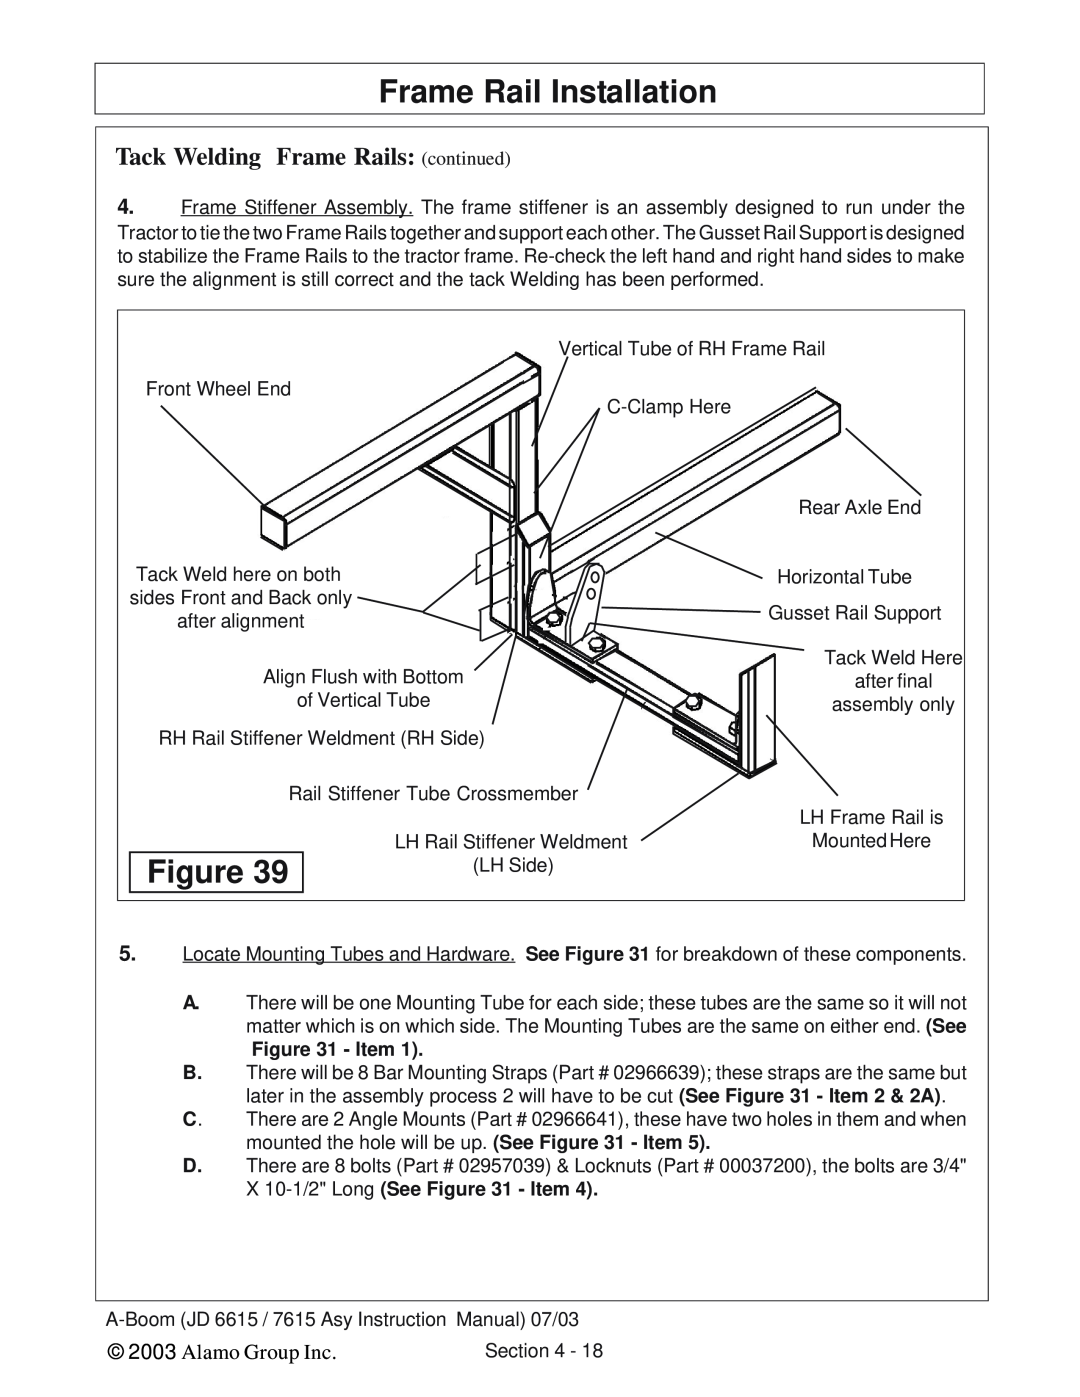 Alamo DSEB-D16/SAS instruction manual Tack Welding Frame Rails continued, Frame Rail Installation, Alamo Group Inc, Item 